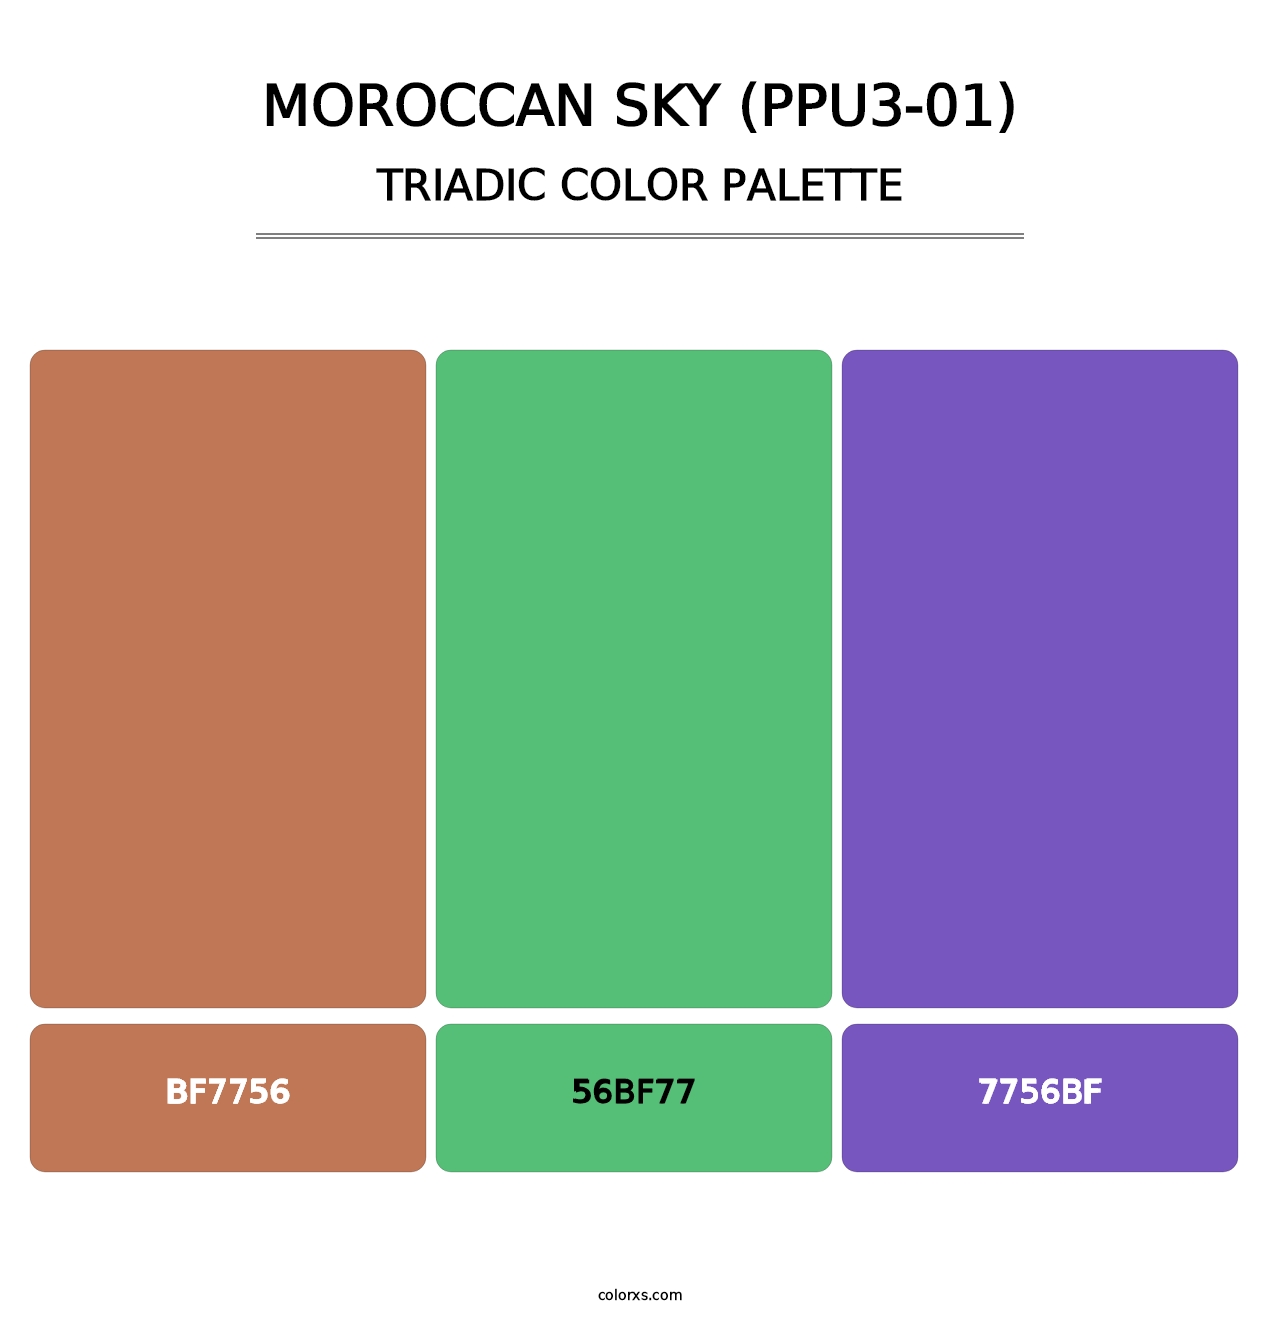 Moroccan Sky (PPU3-01) - Triadic Color Palette